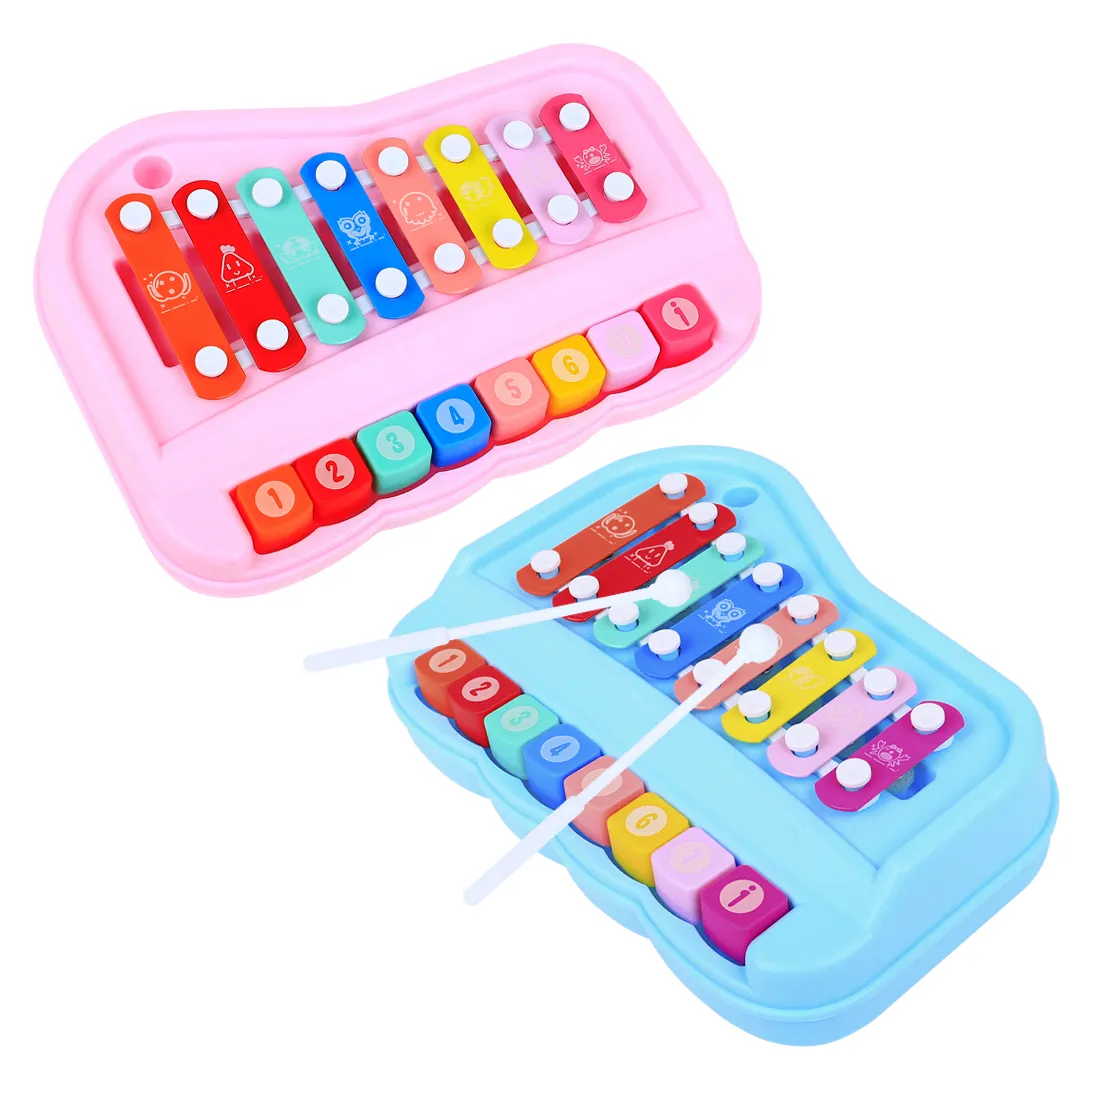 Hot Menjual Terbaru Orff 8 Nada Gambang Belajar Mainan Pendidikan Anak-anak Knock Bermain 2 In 1 Plastik Perkusi Piano Mainan